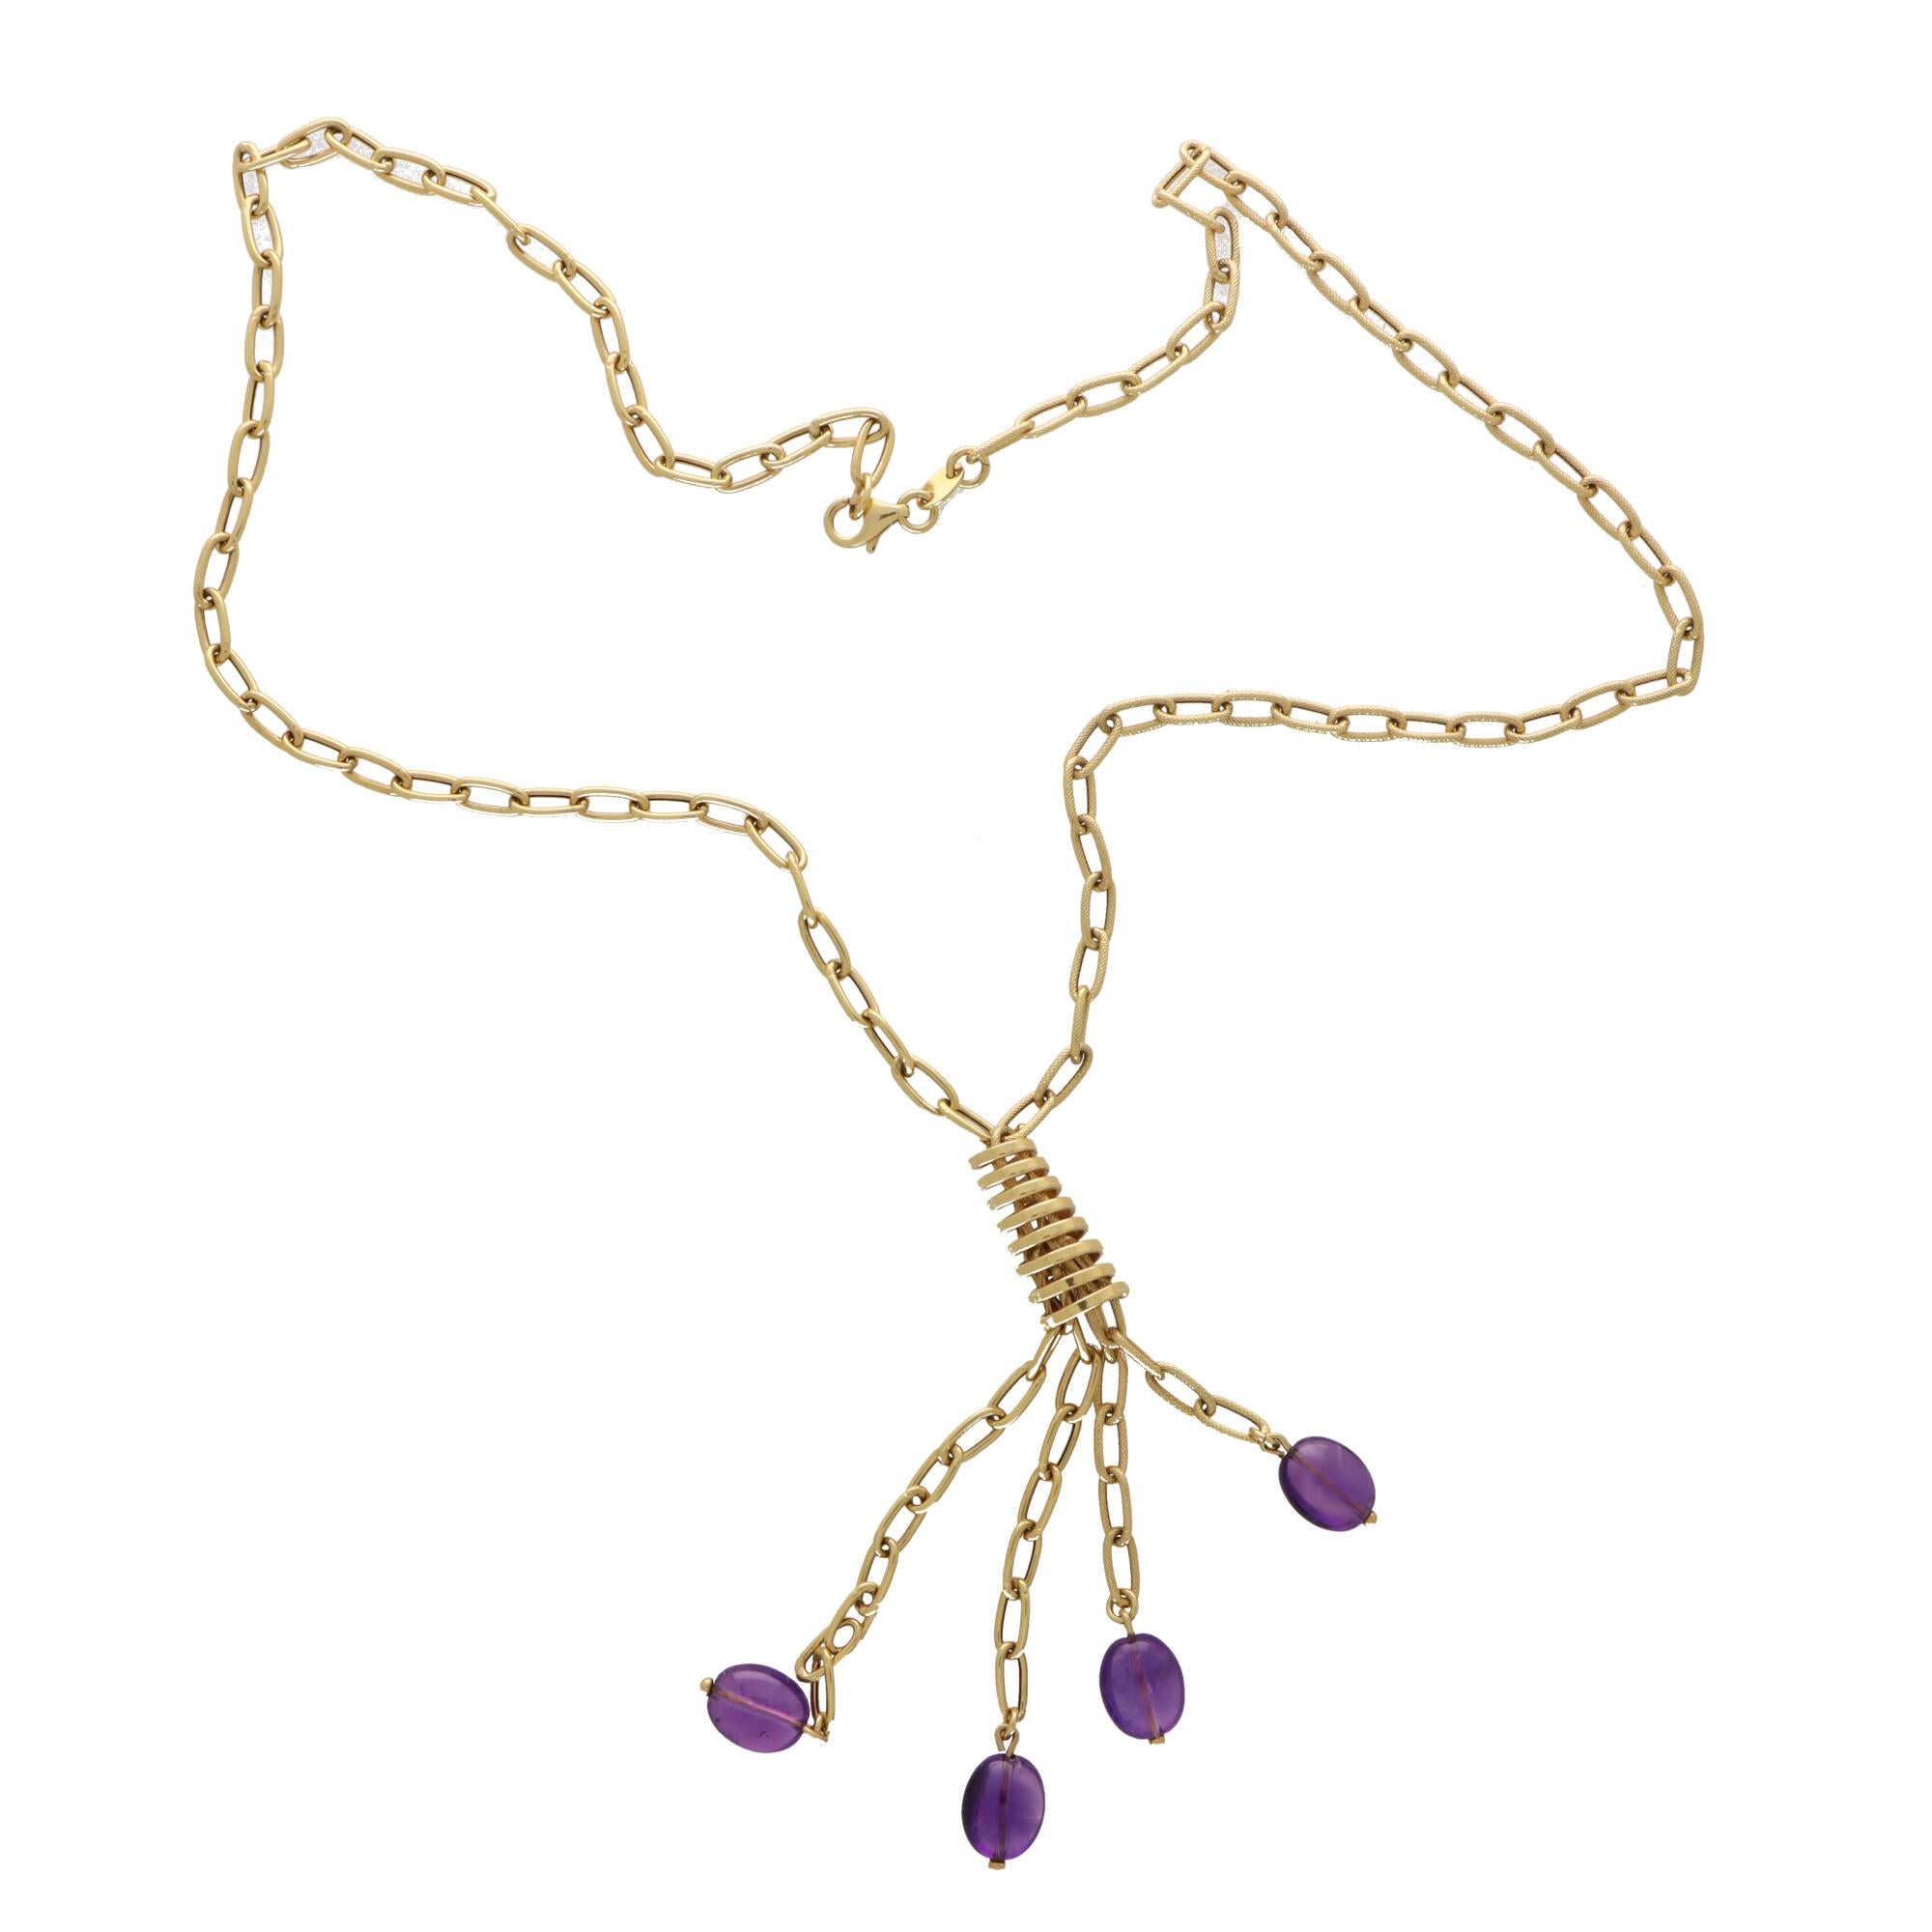 Bead Vintage Italian Amethyst Chain Link Tassel Necklace Set in 18k Yellow Gold